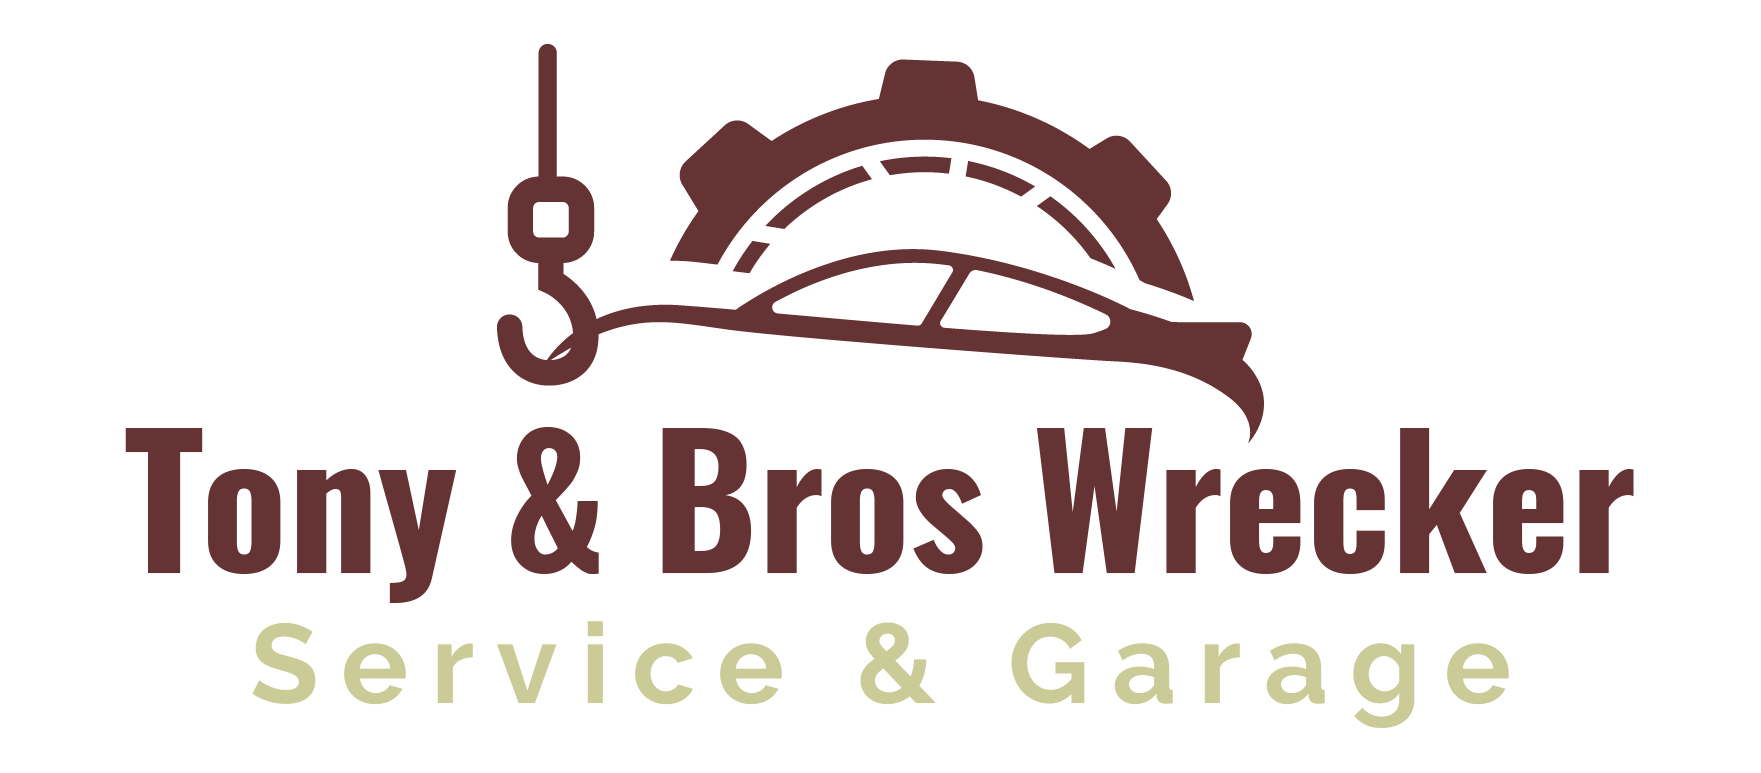 Tony & Bros Wrecker Service & Garage